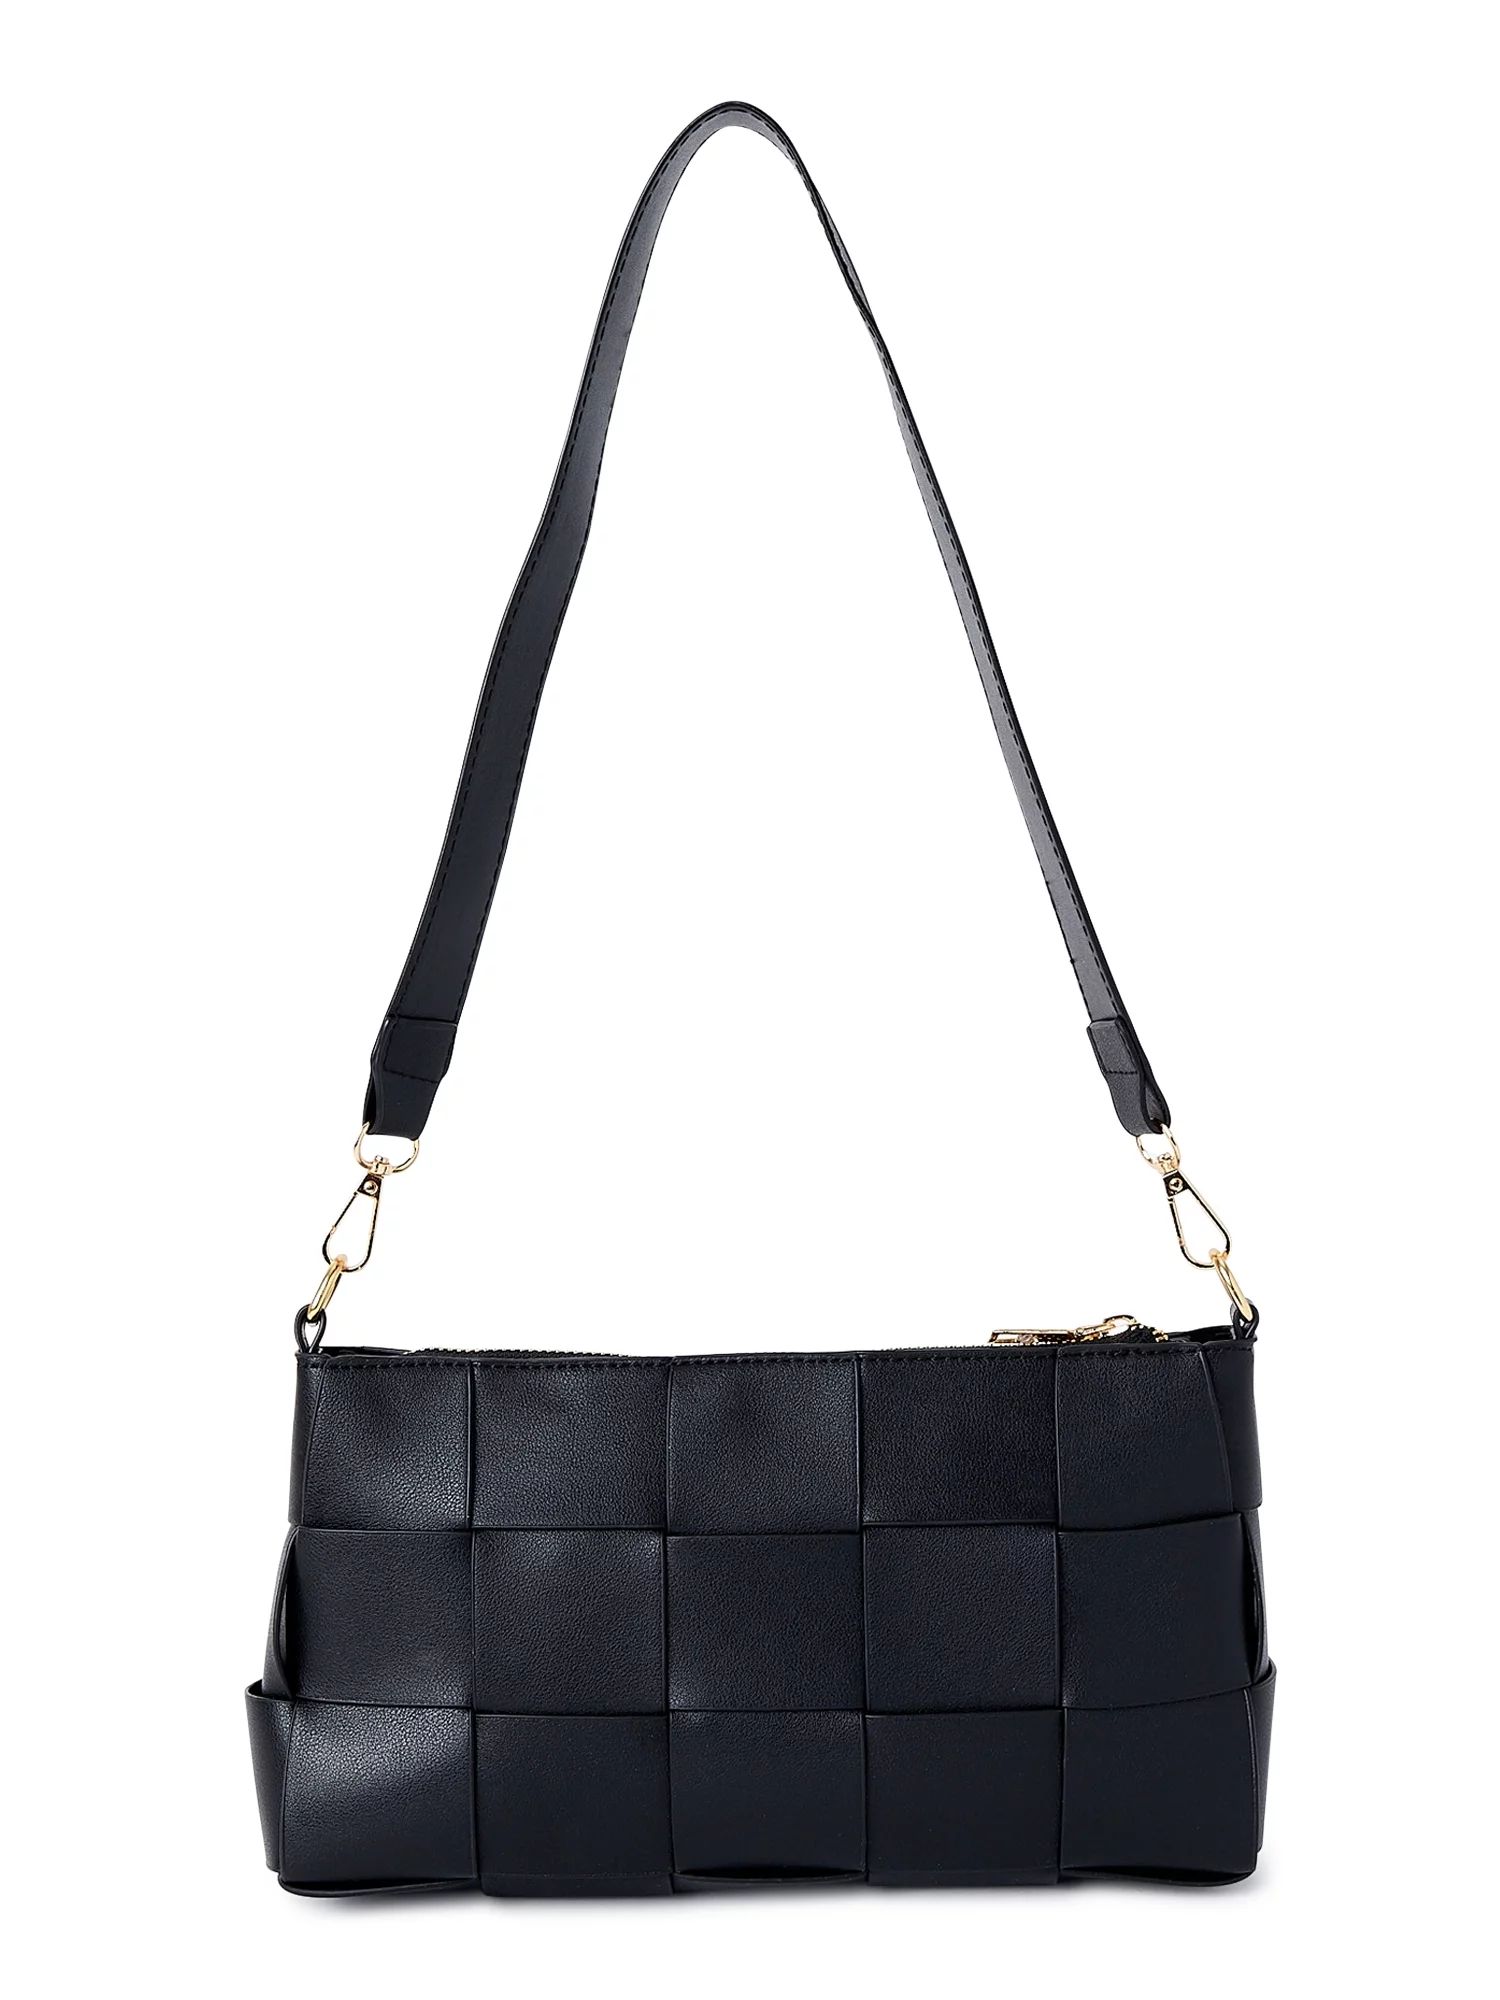 Jane & Berry Women's Woven Faux Leather Shoulder Bag Black | Walmart (US)